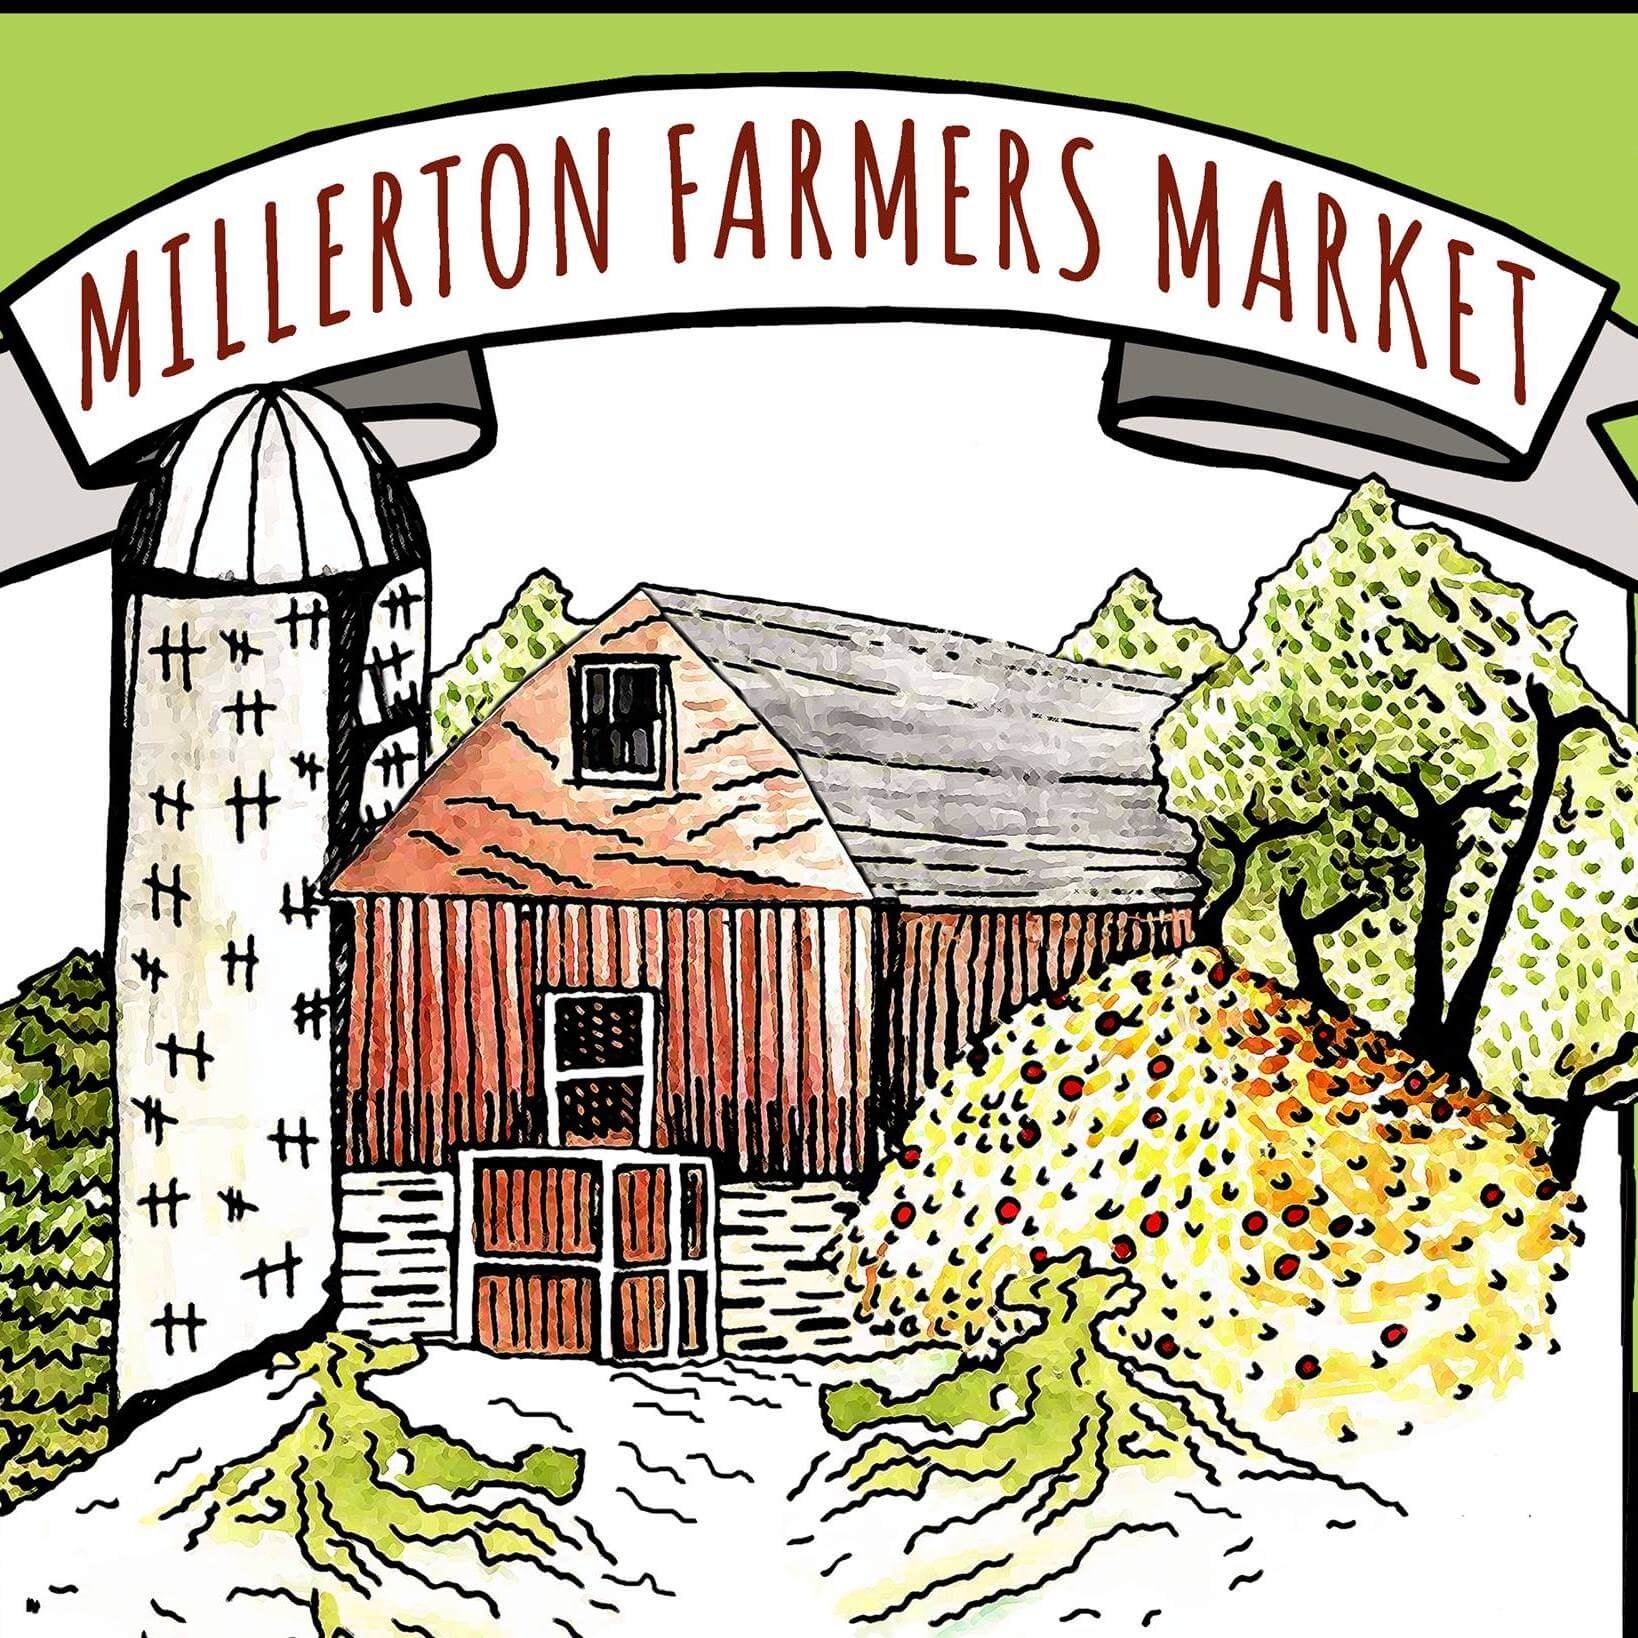 Mountain Valley Farm - Attractions - Millerton Farmers Market